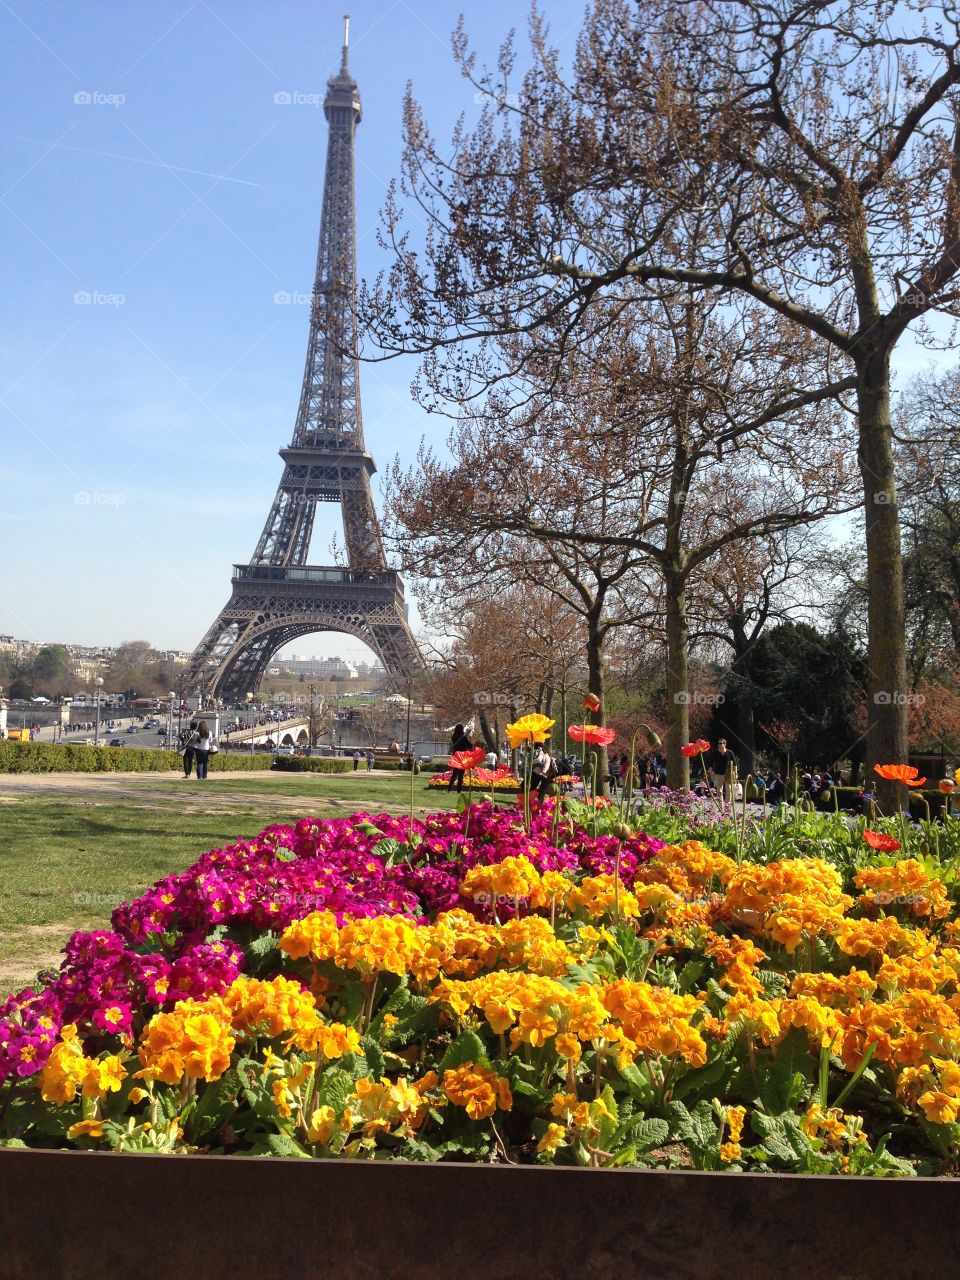 Paris in spring time